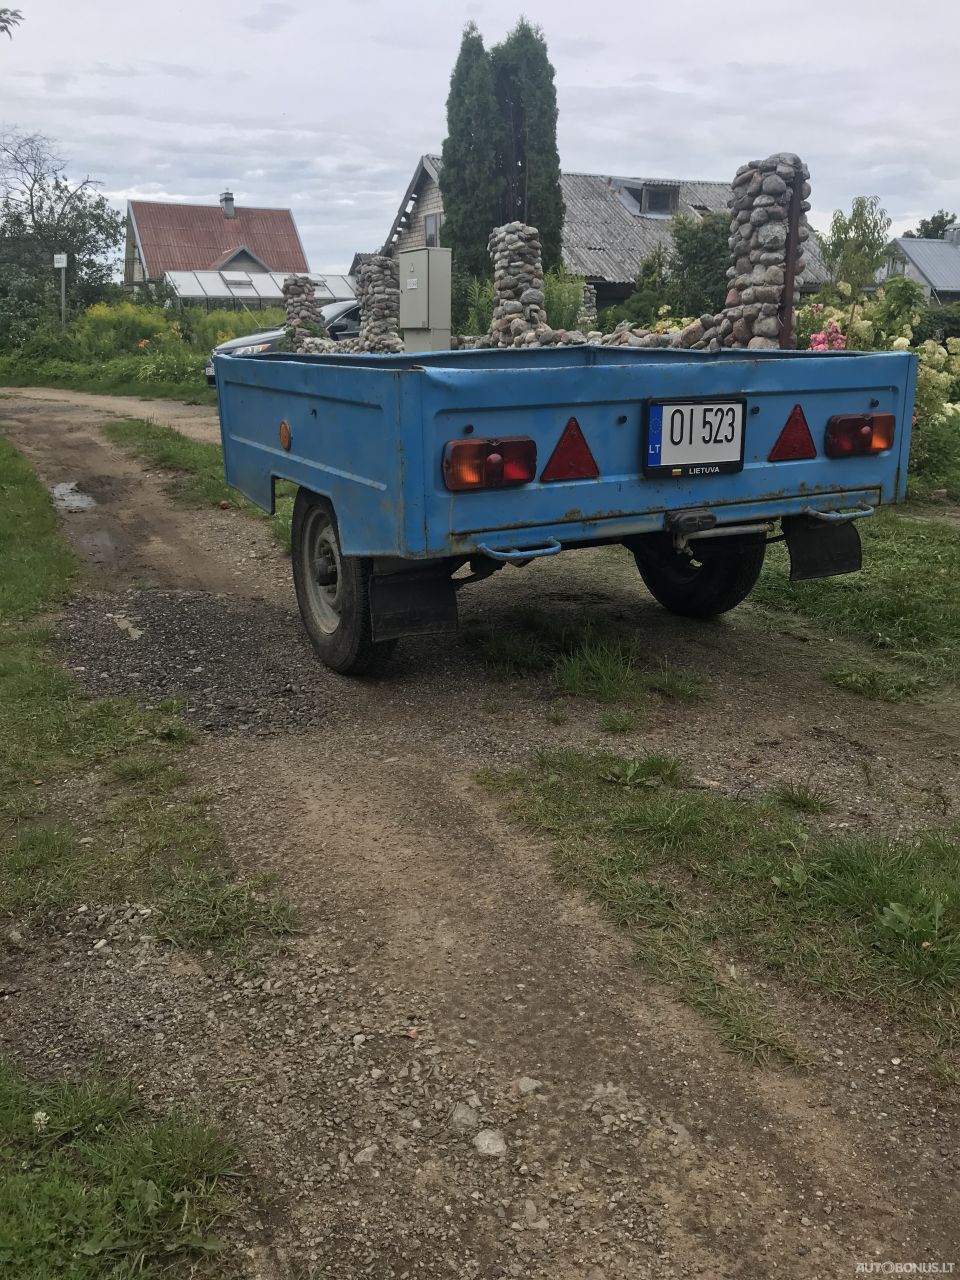 Car trailer